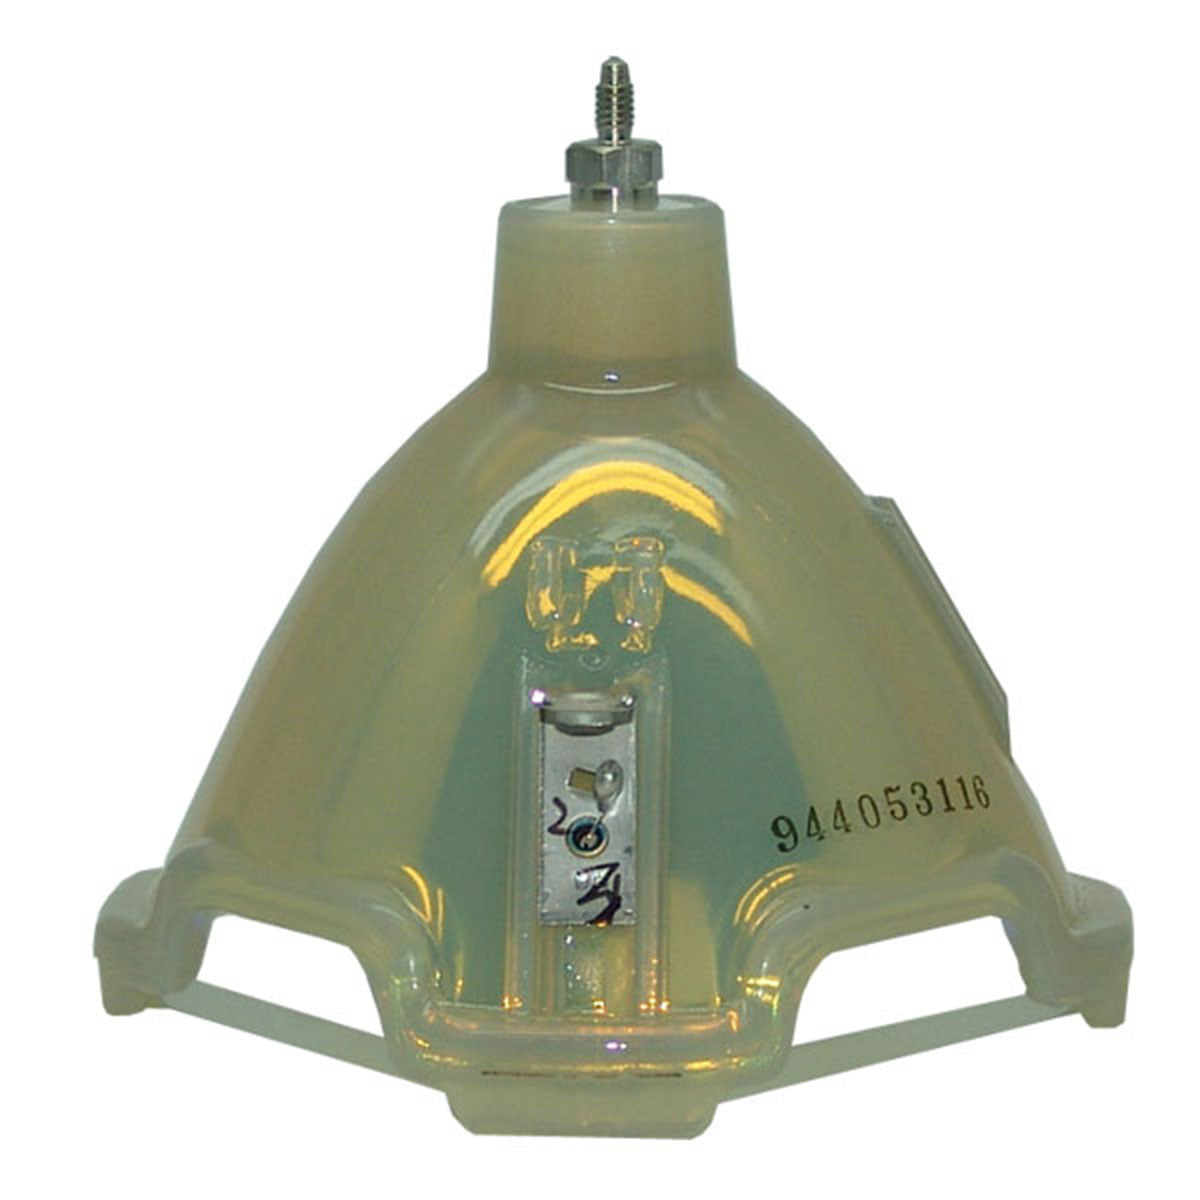 Geha 60-272371 Philips Projector Bare Lamp